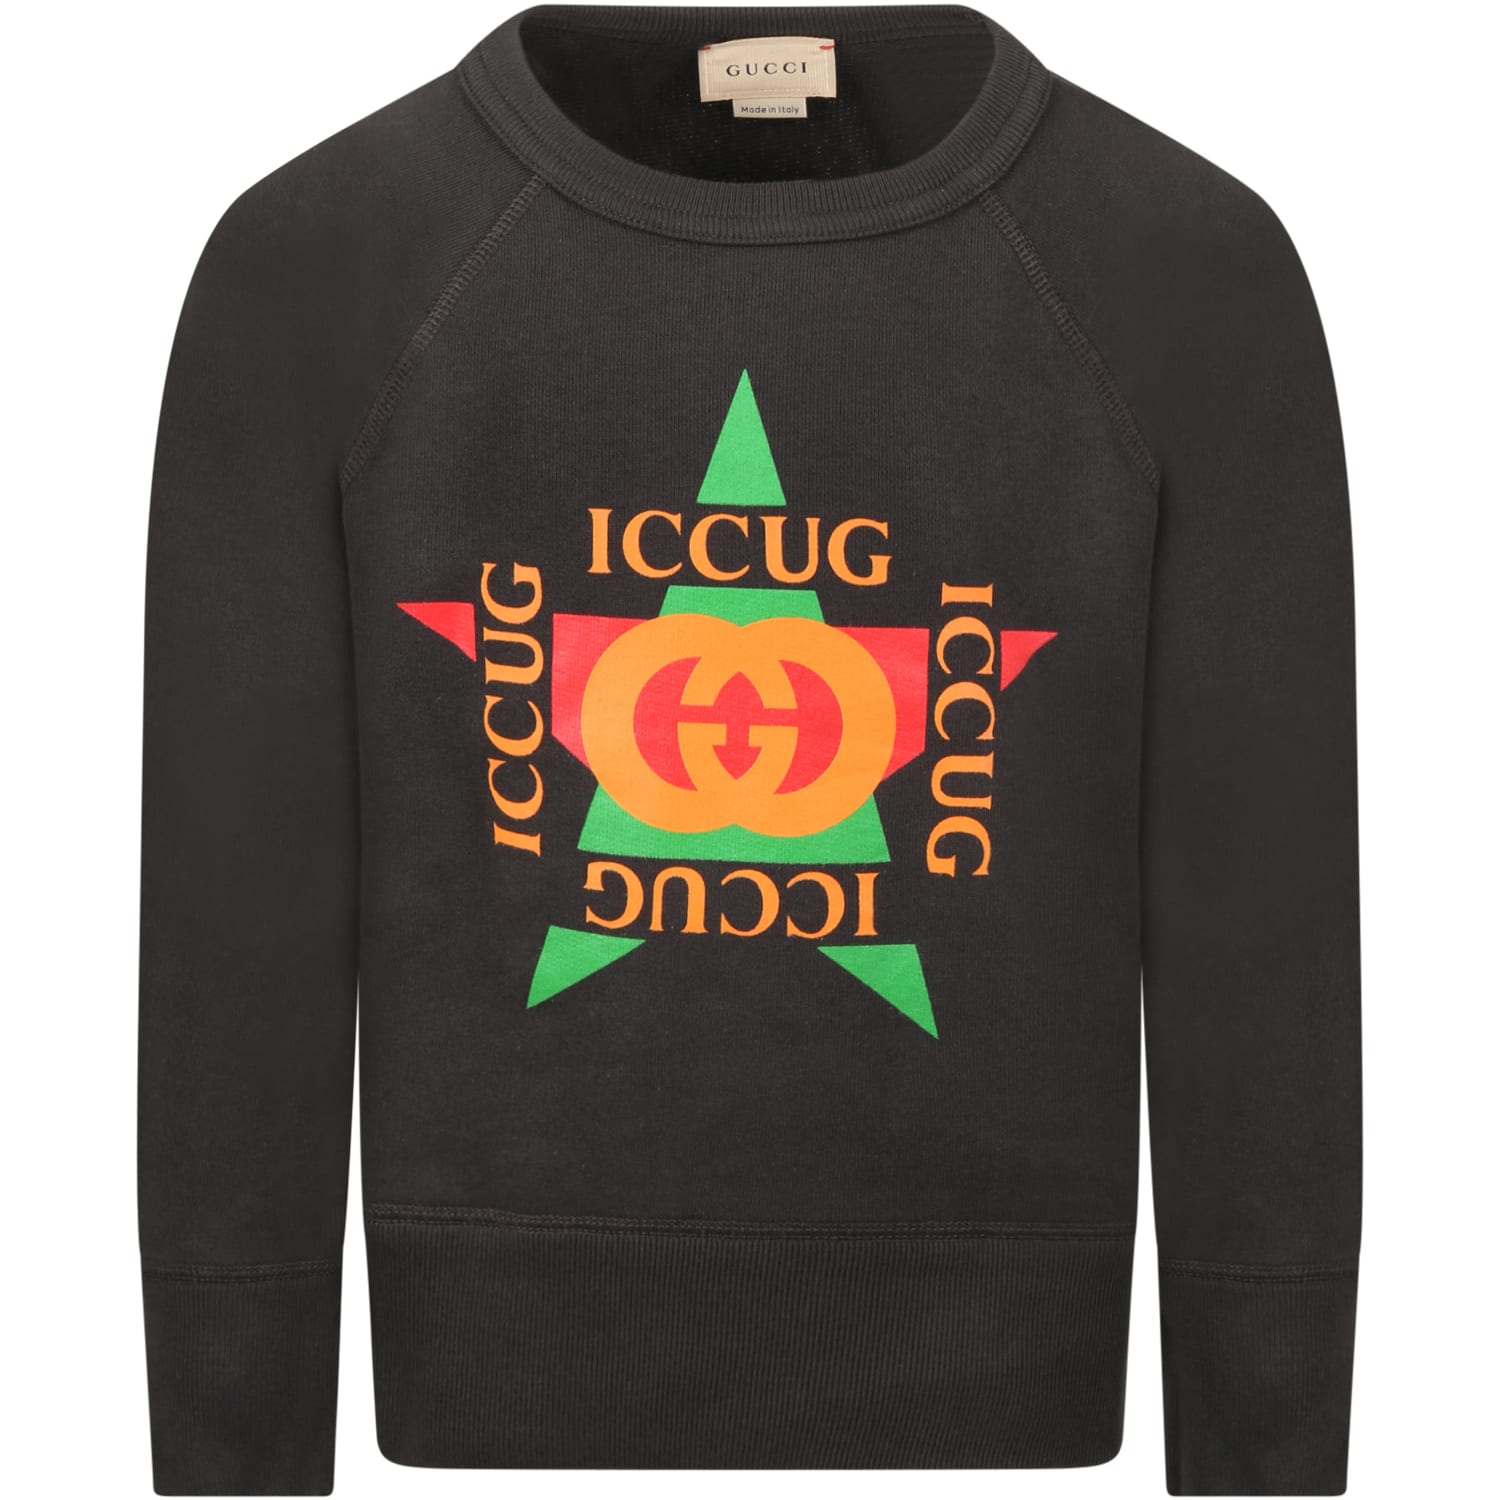 Gucci Grey Sweatshirt For Kids With Logos